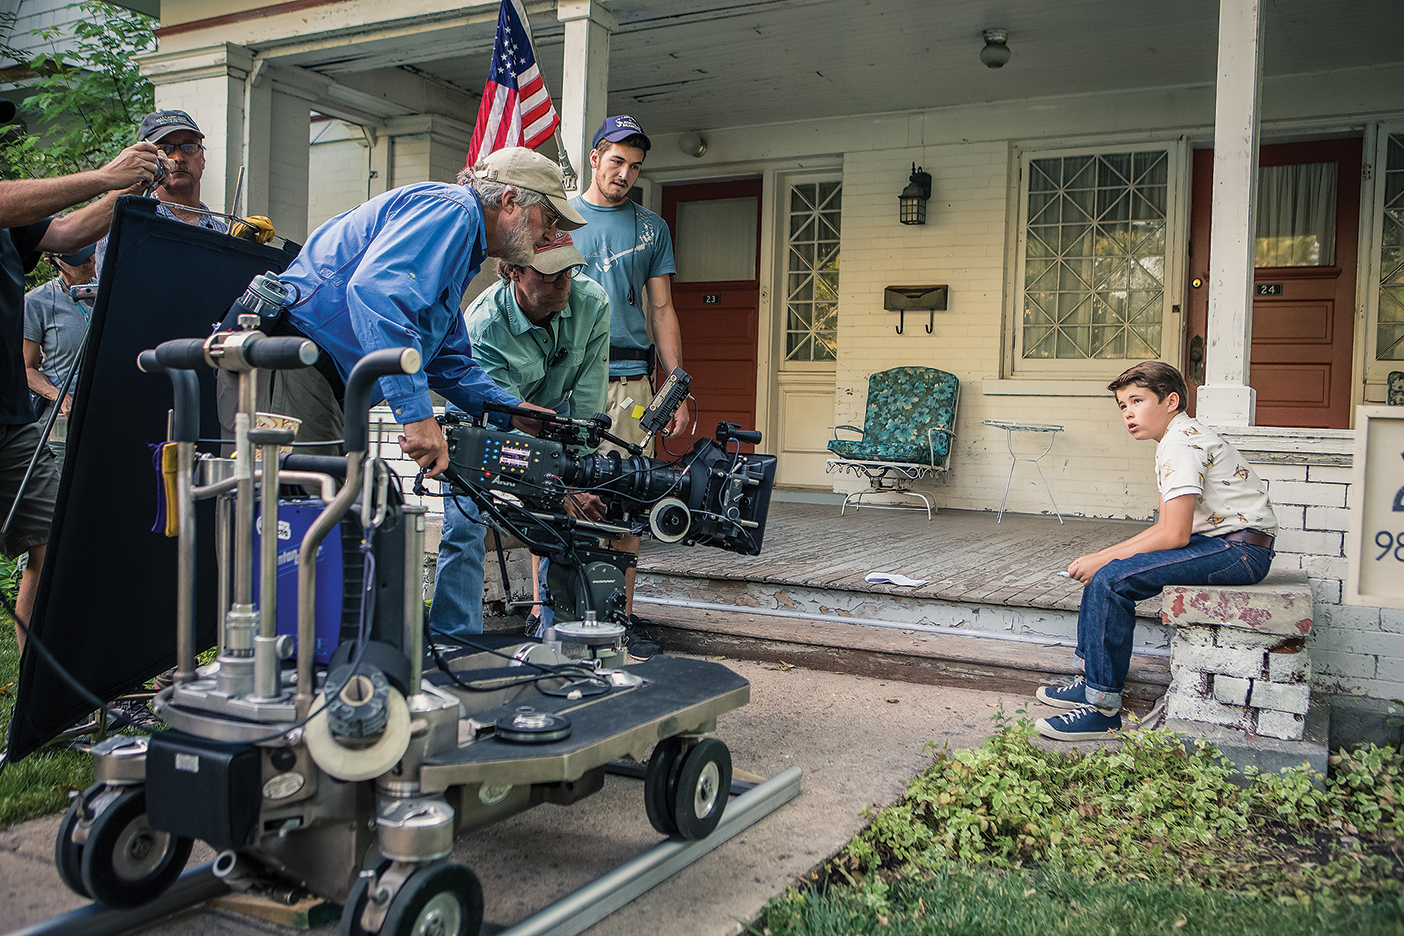 crews film a young boy sitting on a porch